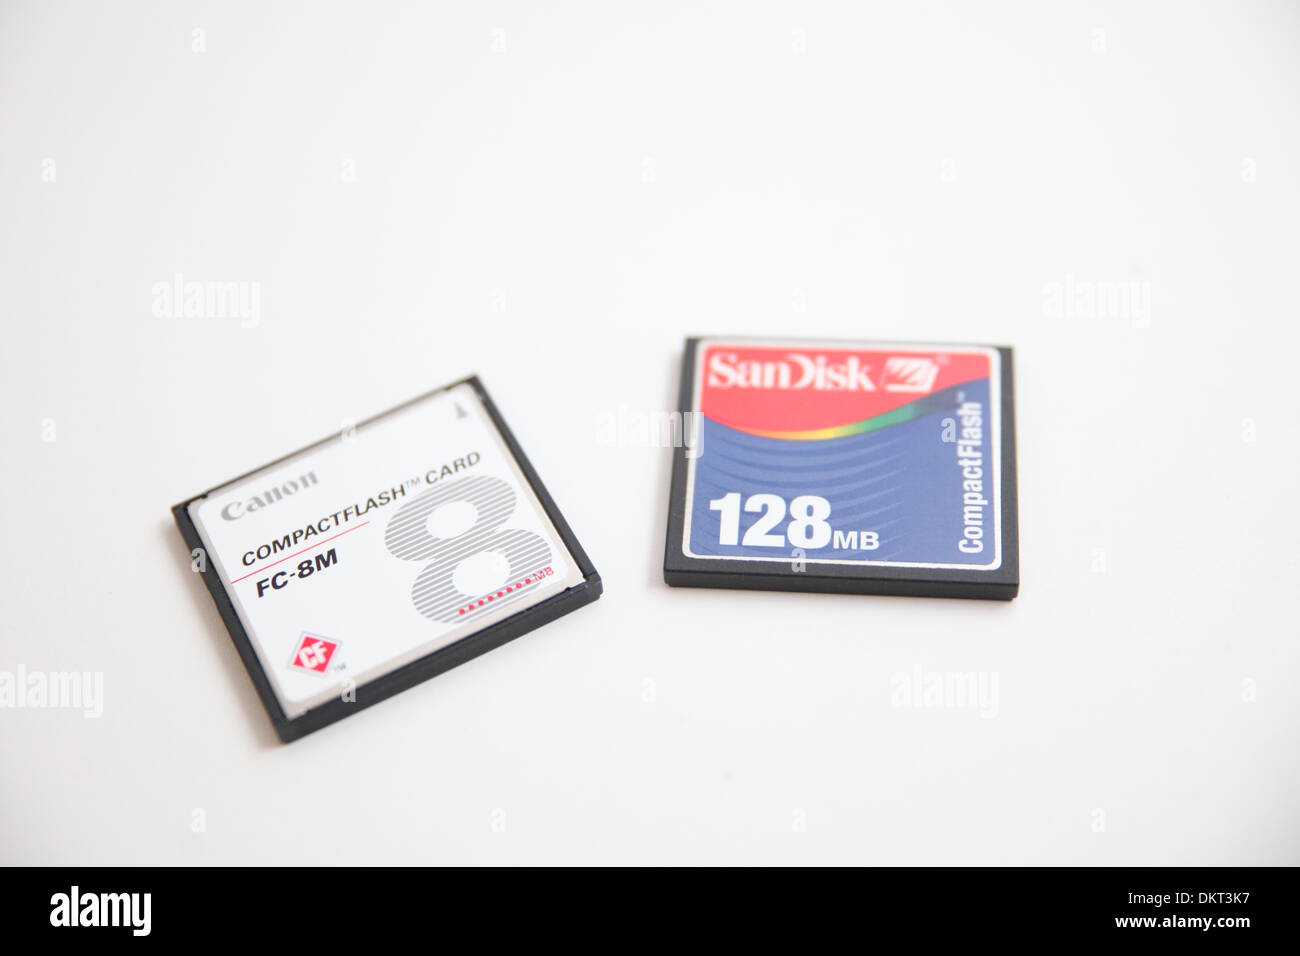 Sandisk 128 MB Carte Compact Flash